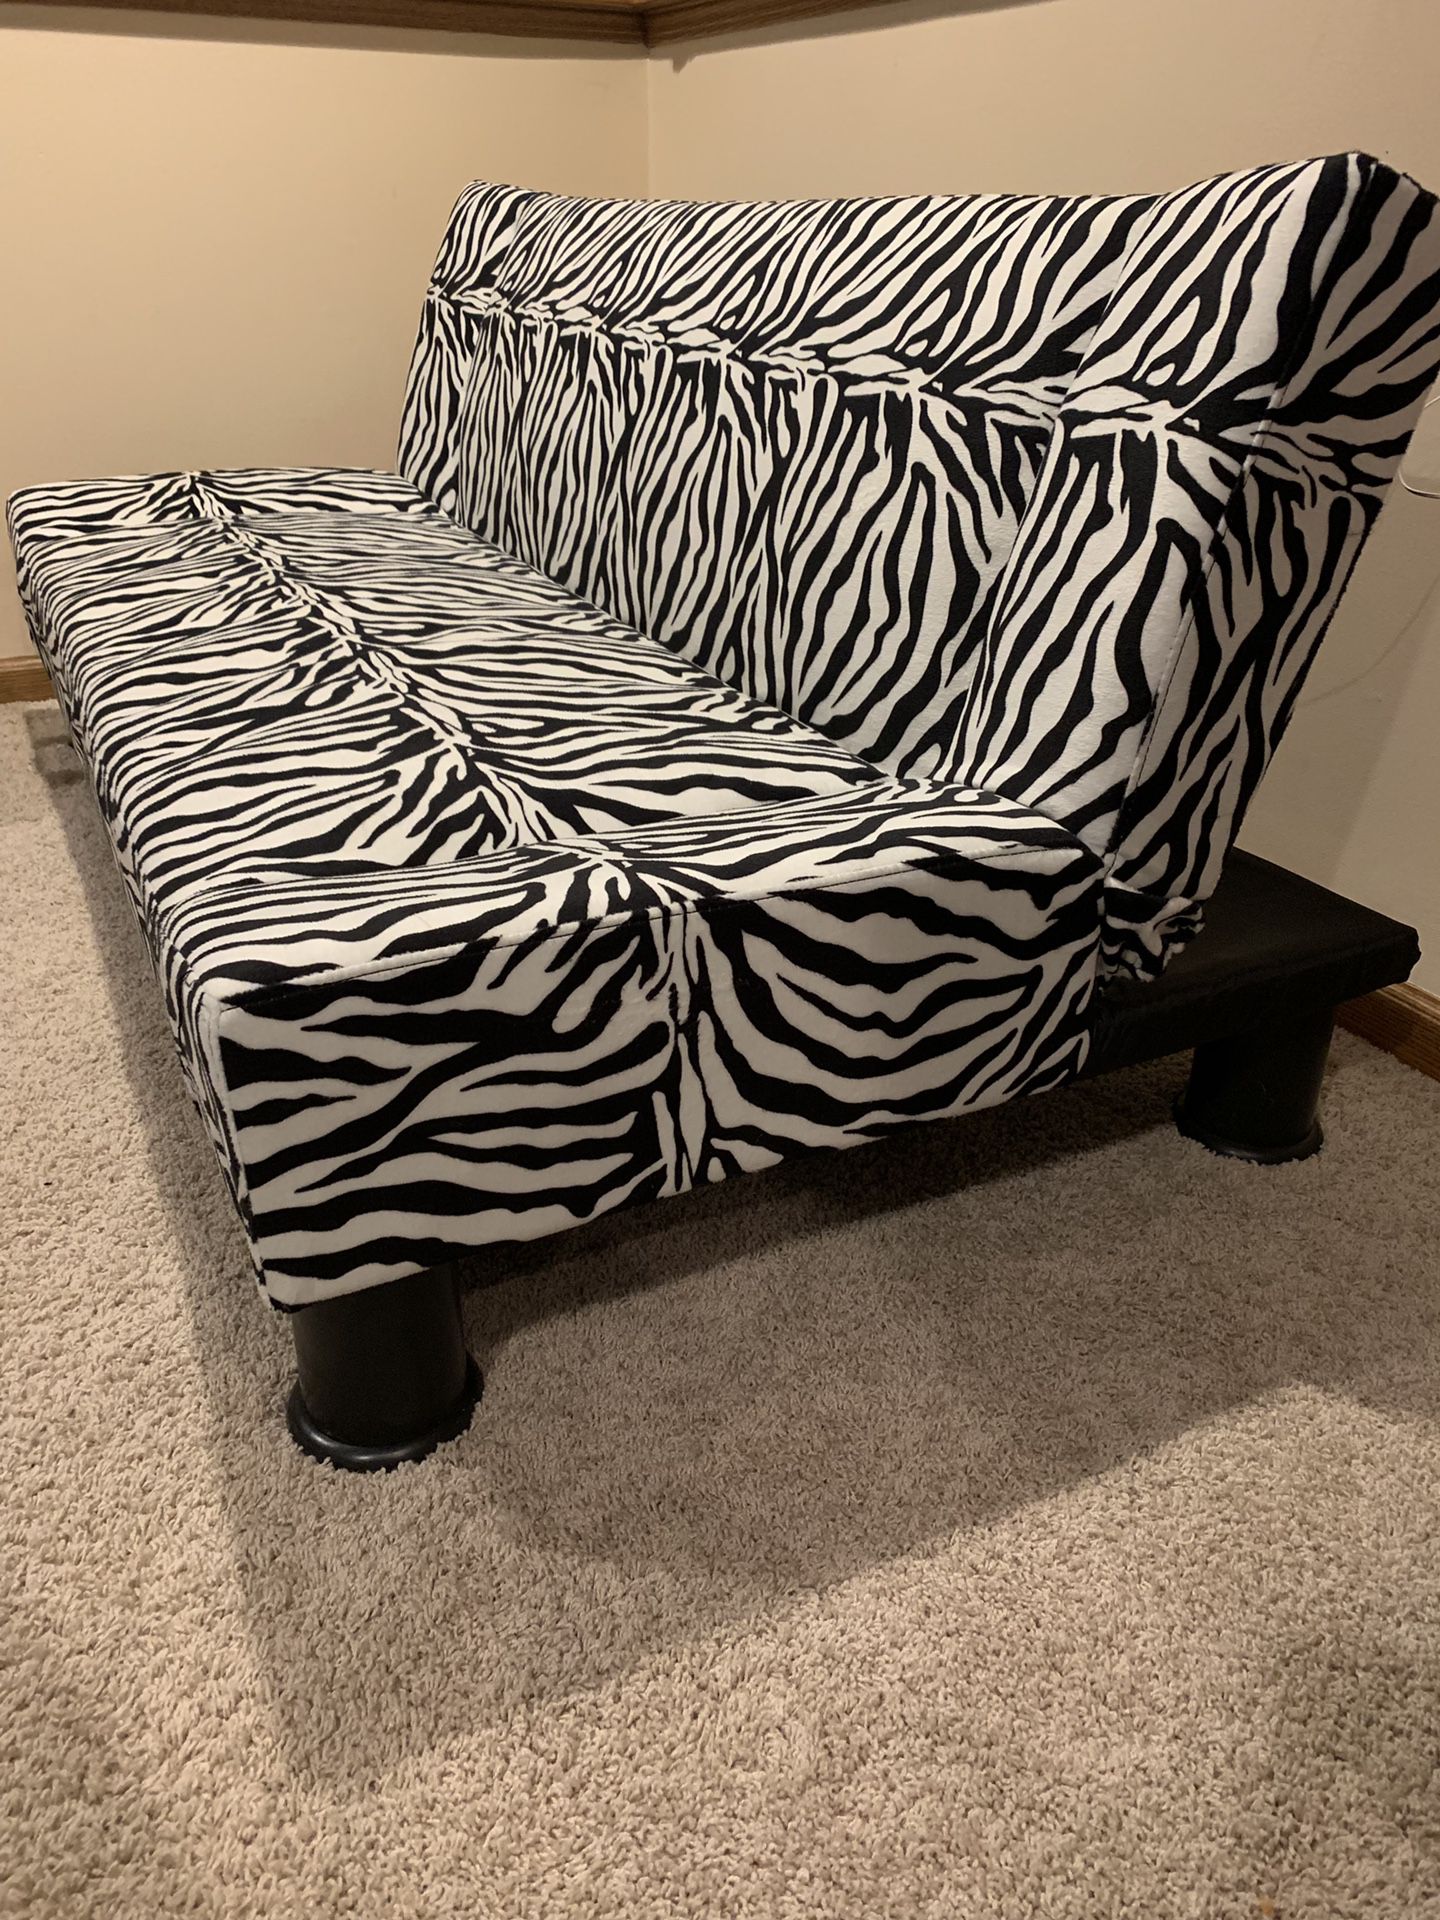 Zebra print futon